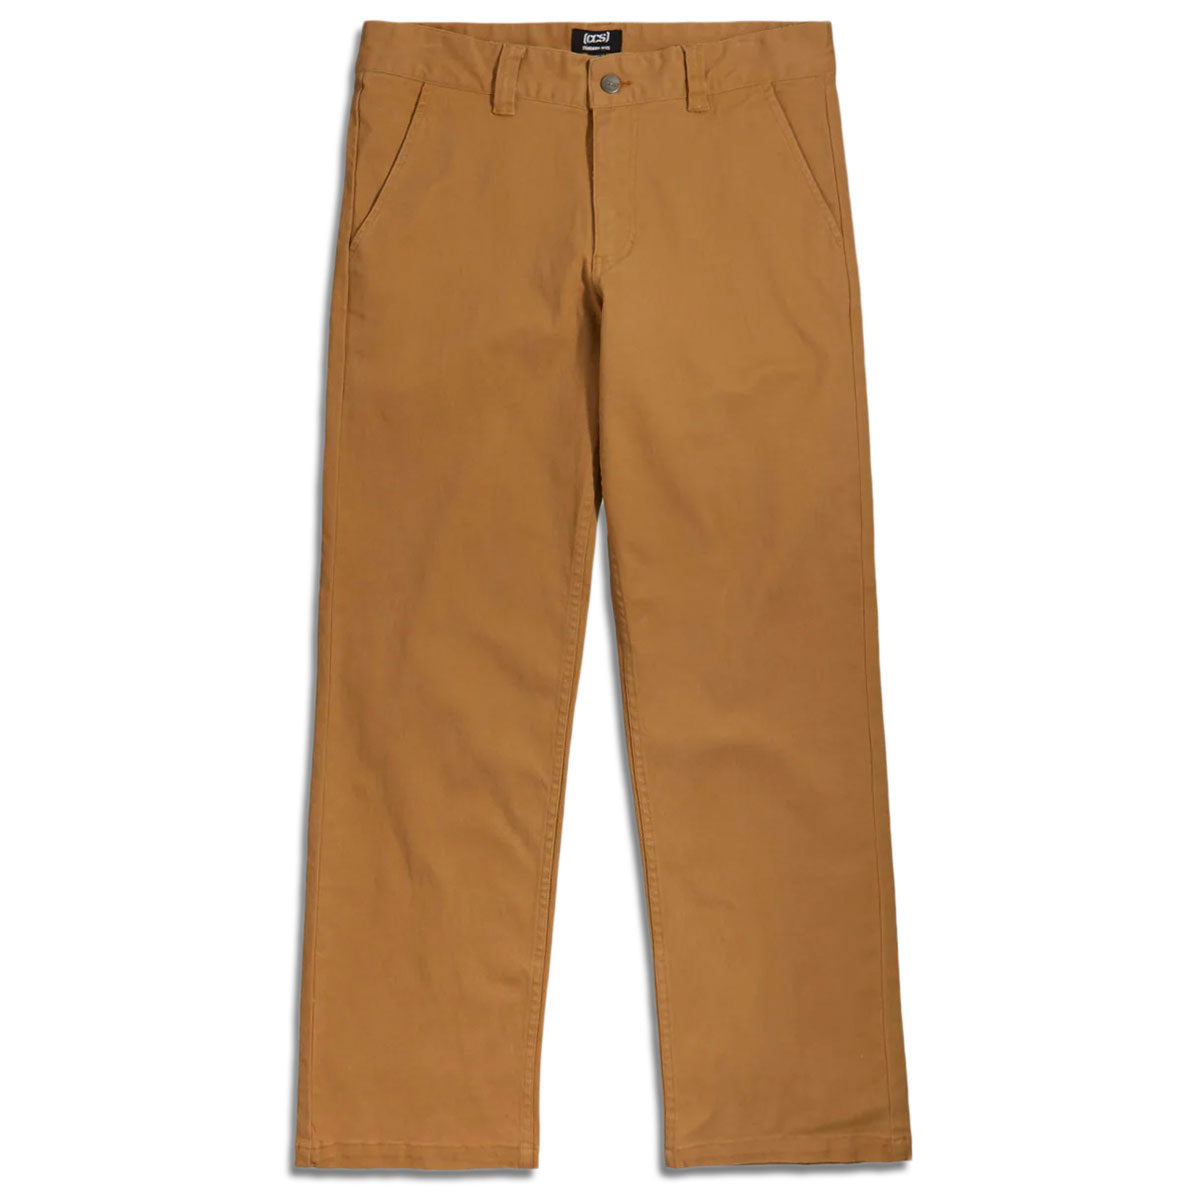 CCS Standard Plus Relaxed Chino Pants - Khaki